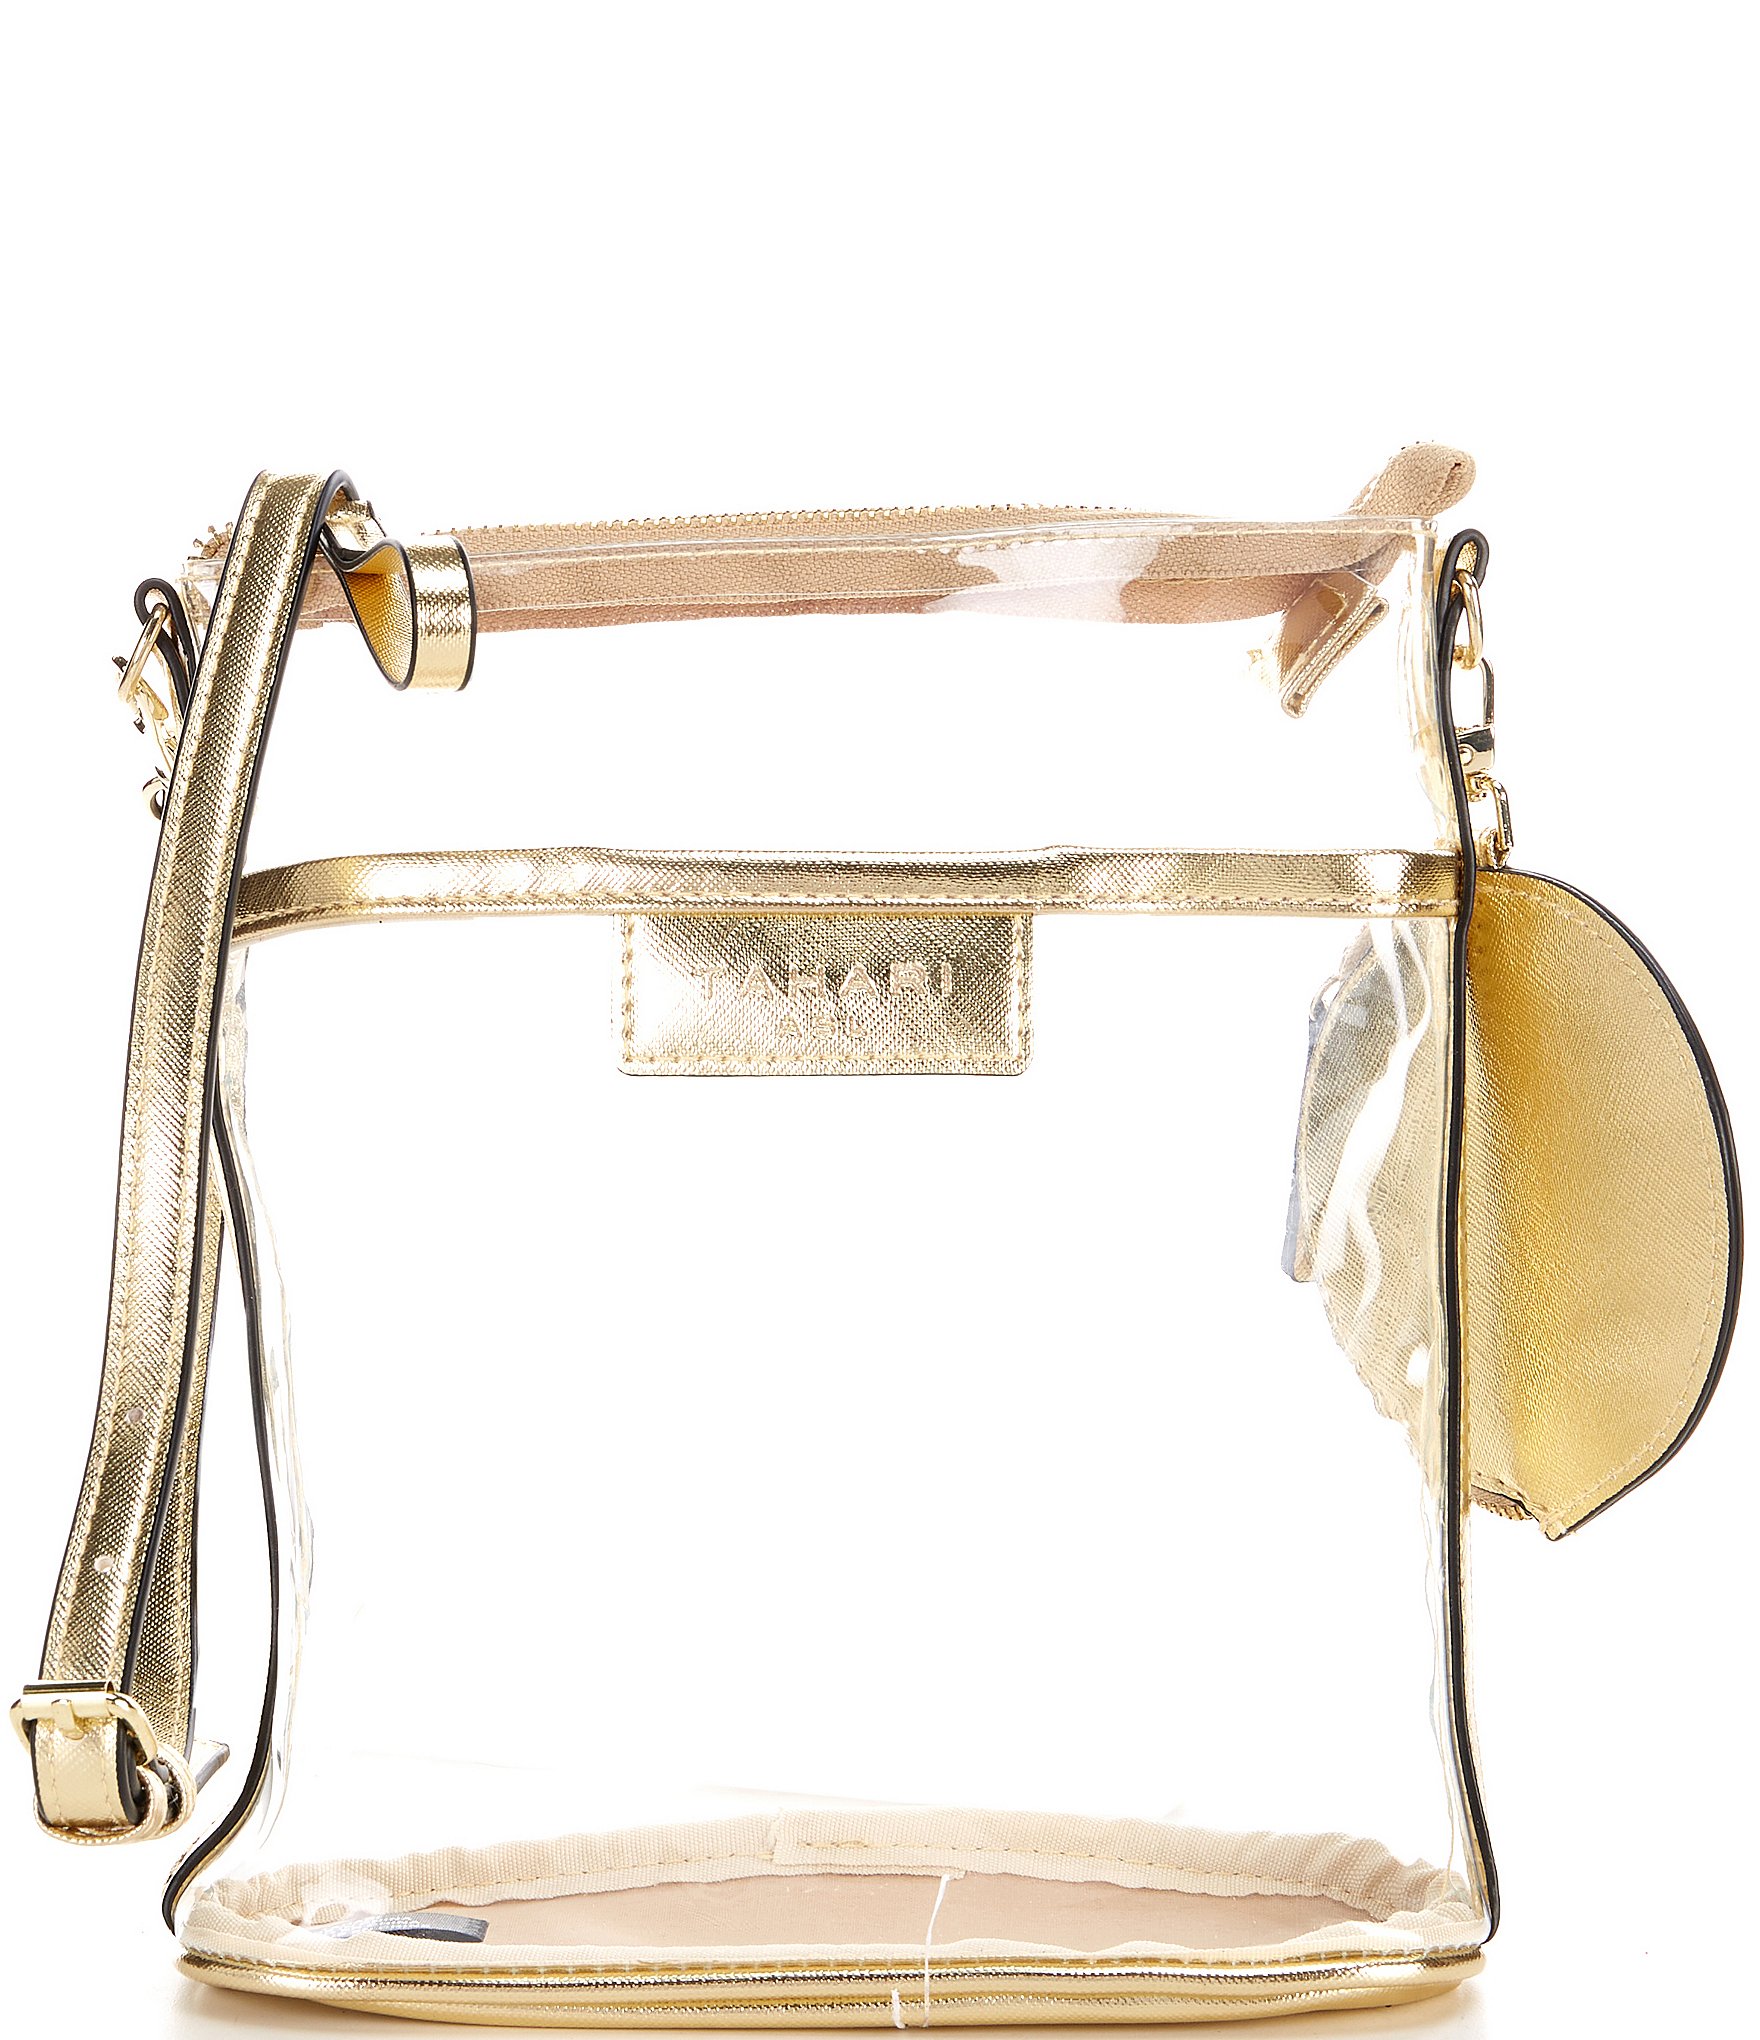 kate spade new york Handbags, Purses & Wallets | Dillard's